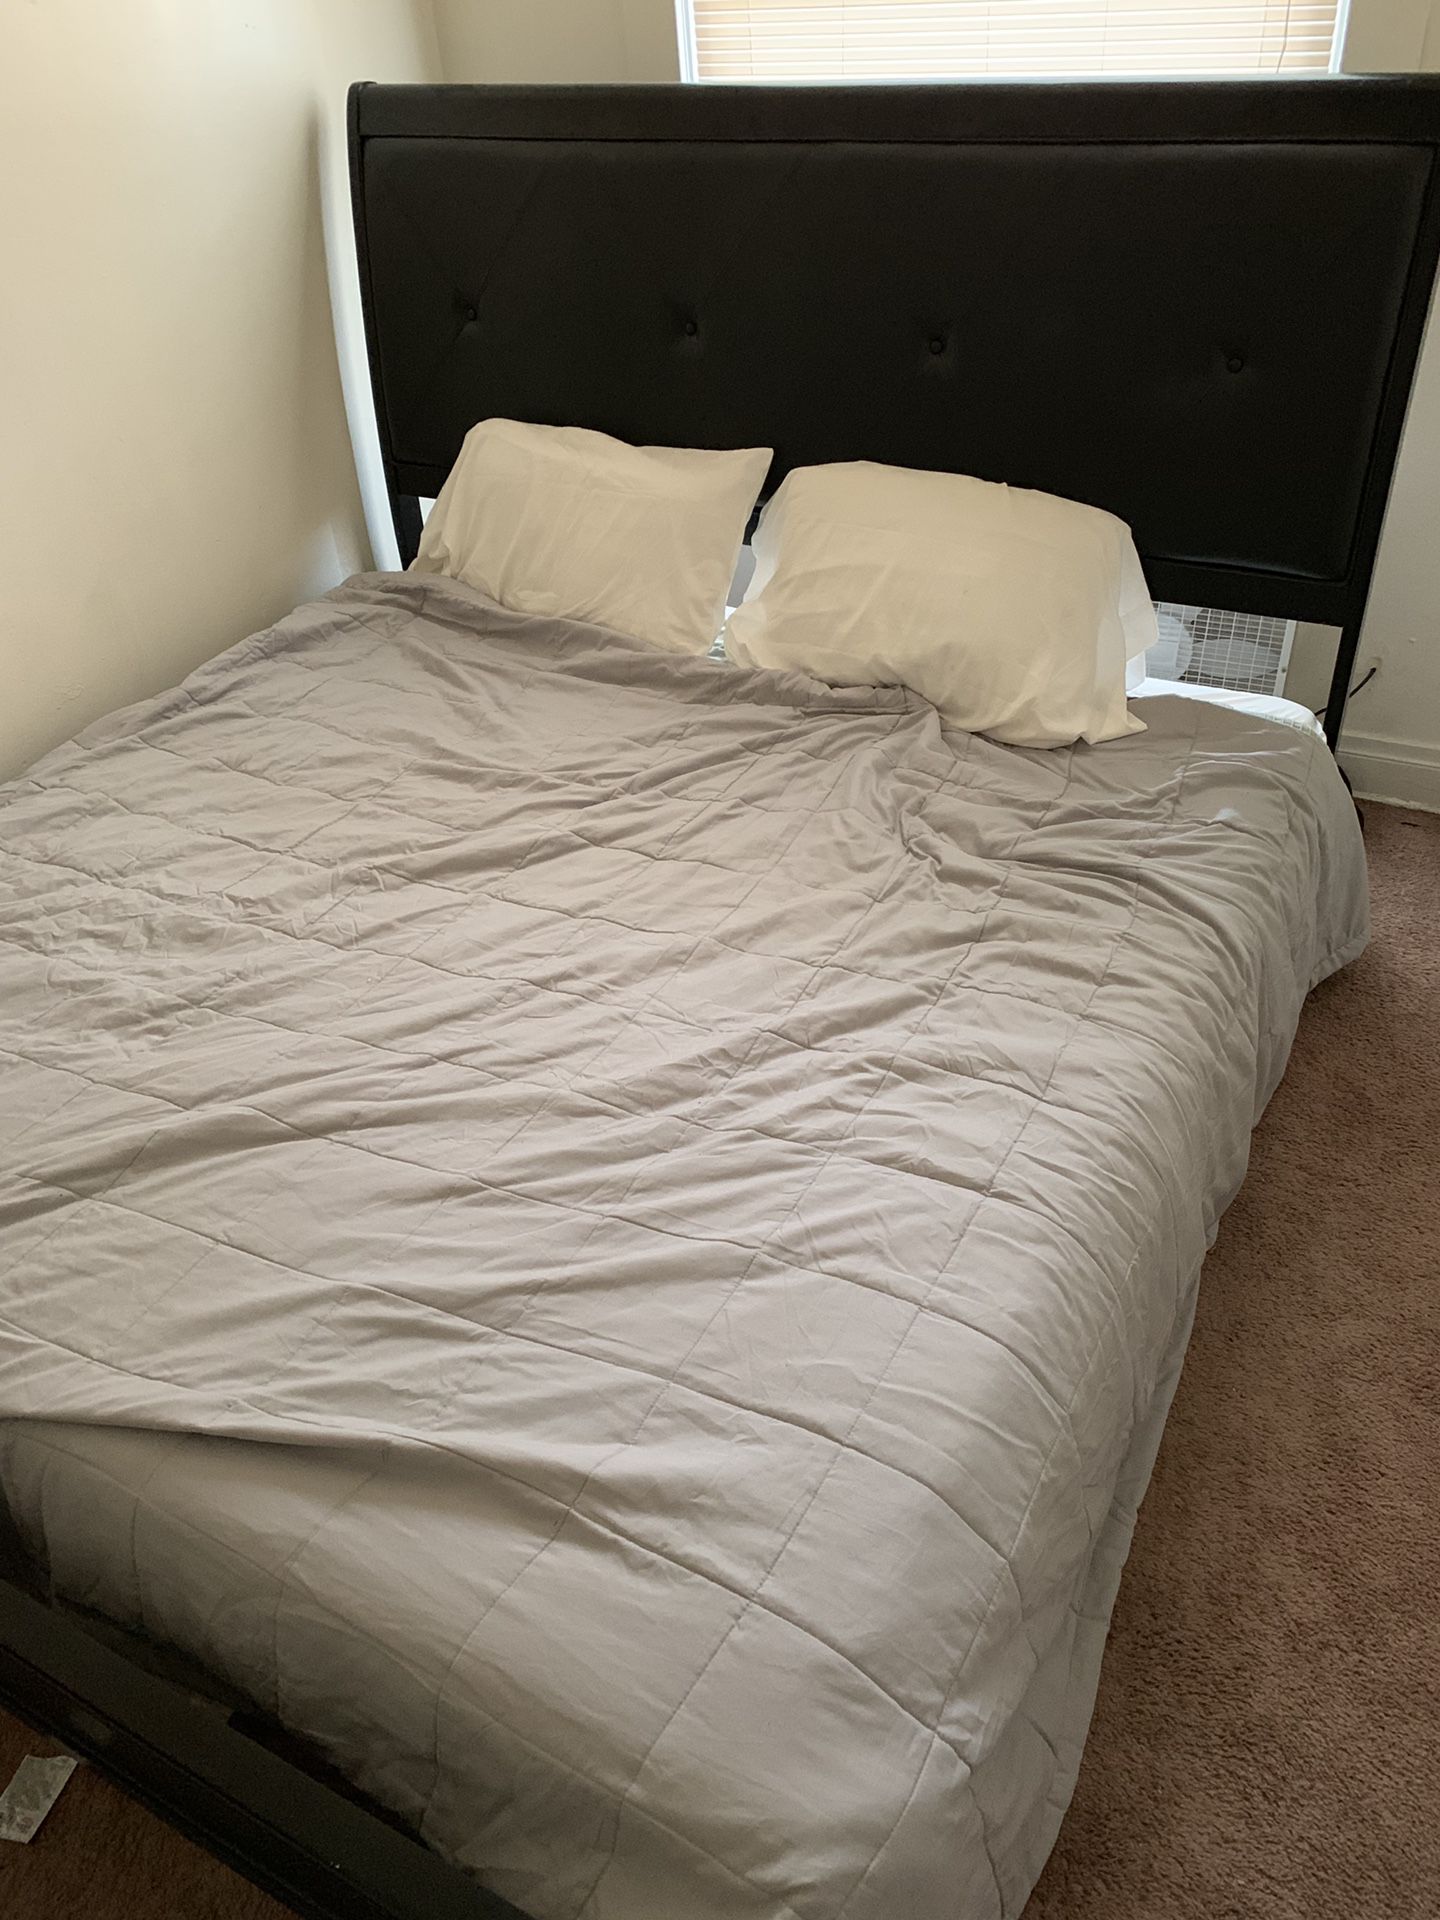 King size bed mattress/frame